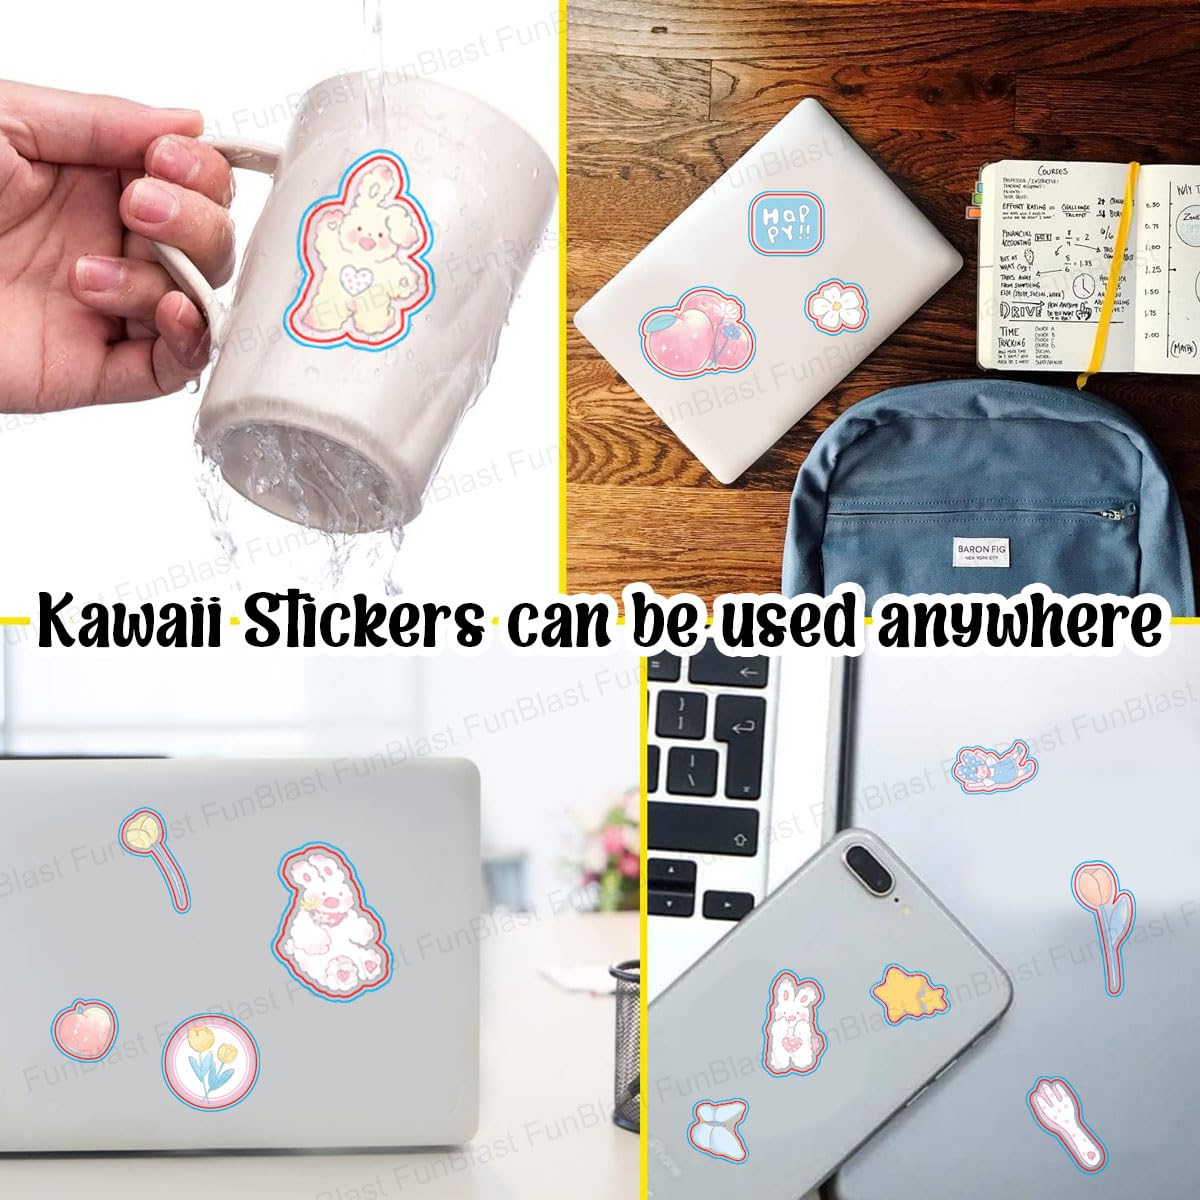 Kawaii Stickers Set – 16 Sheet (100+ Pcs) DIY 3D Stickers for Girls, Aesthetic Sticker, Stickers for Journaling, Scrapbooking (PeachWish-4X4=16Sheet)